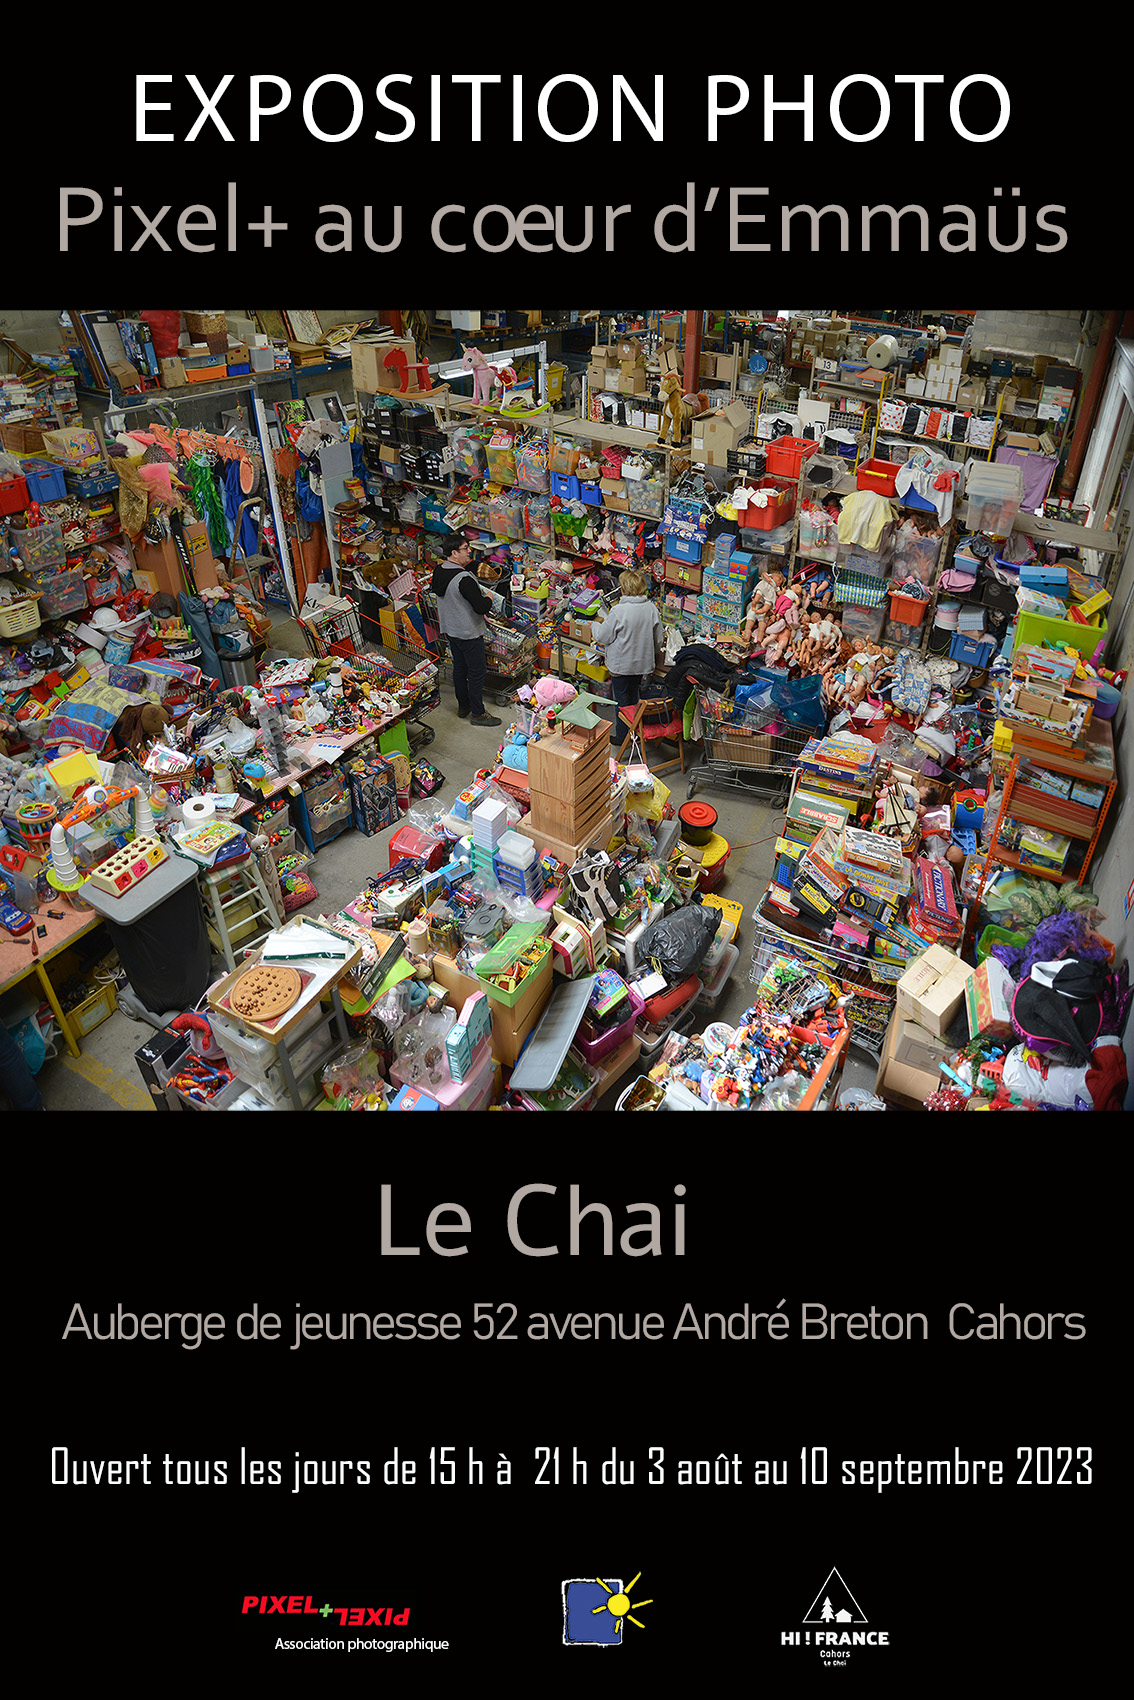 Expo-photo au CHAI, "Pixel + au cœur d'Emmaüs Cahors" null France null null null null